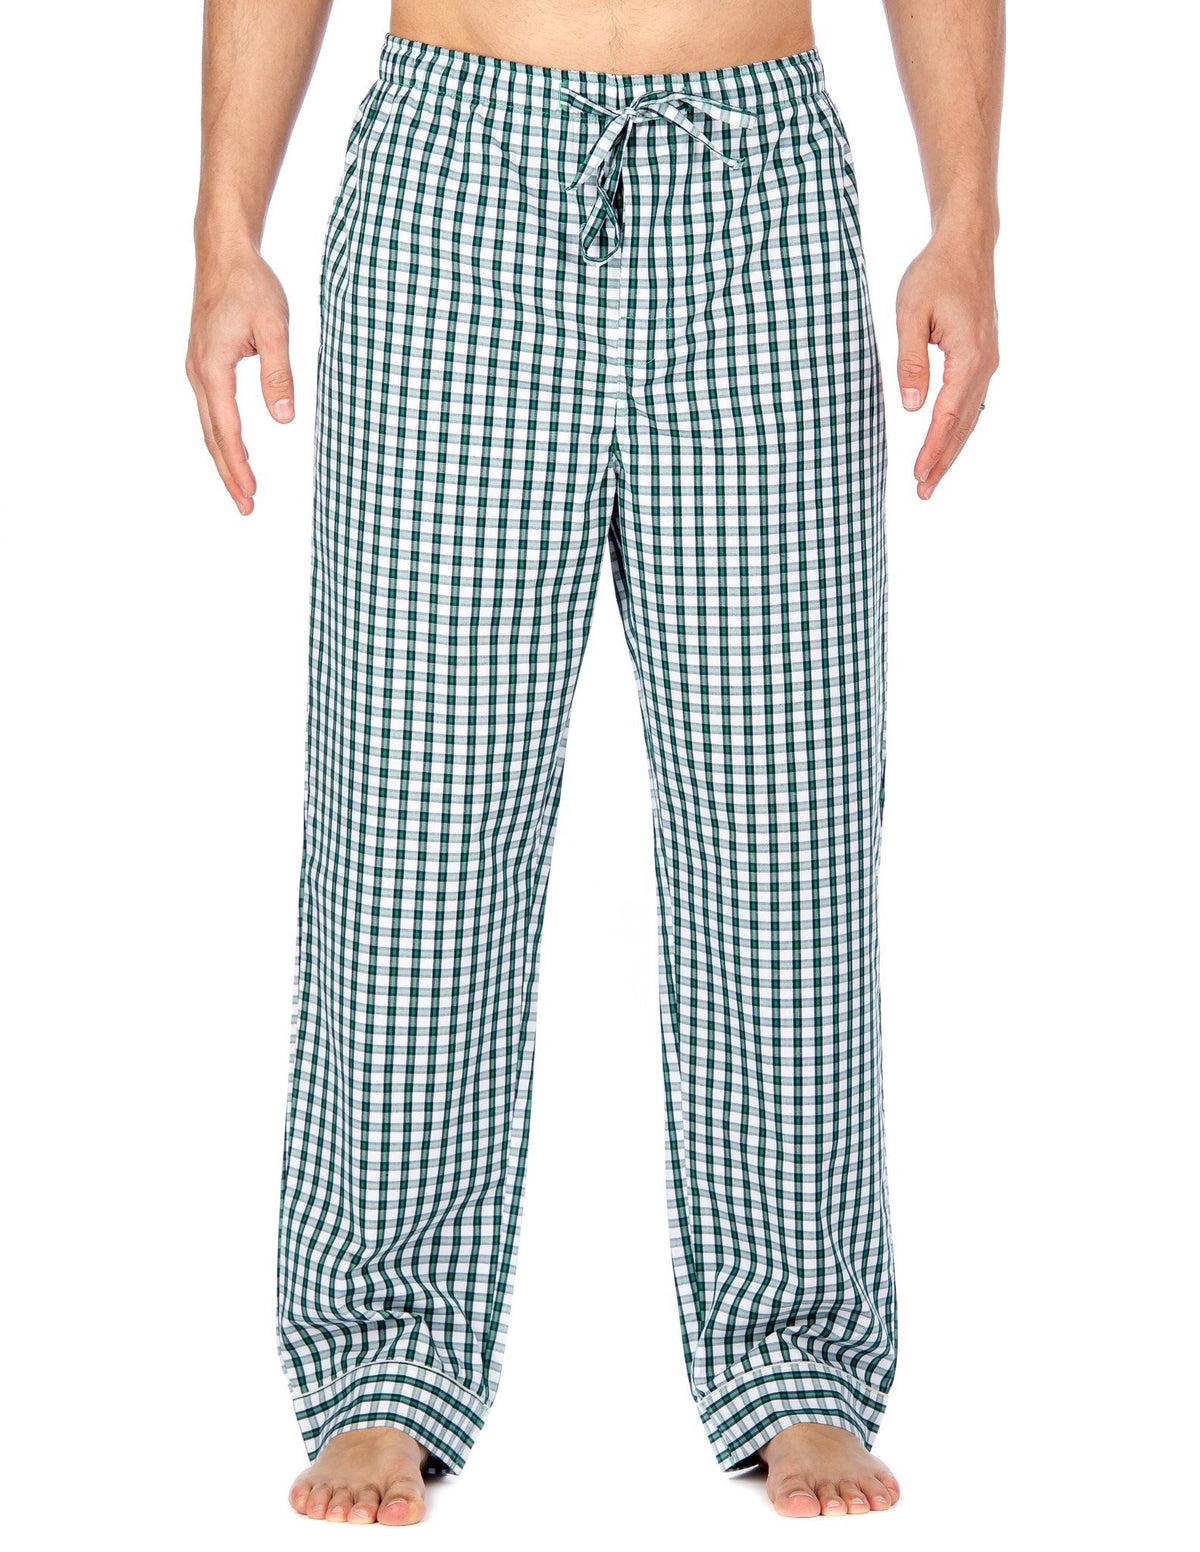 Men's Bamboo Sleep/Lounge Pants - Checks Green-White